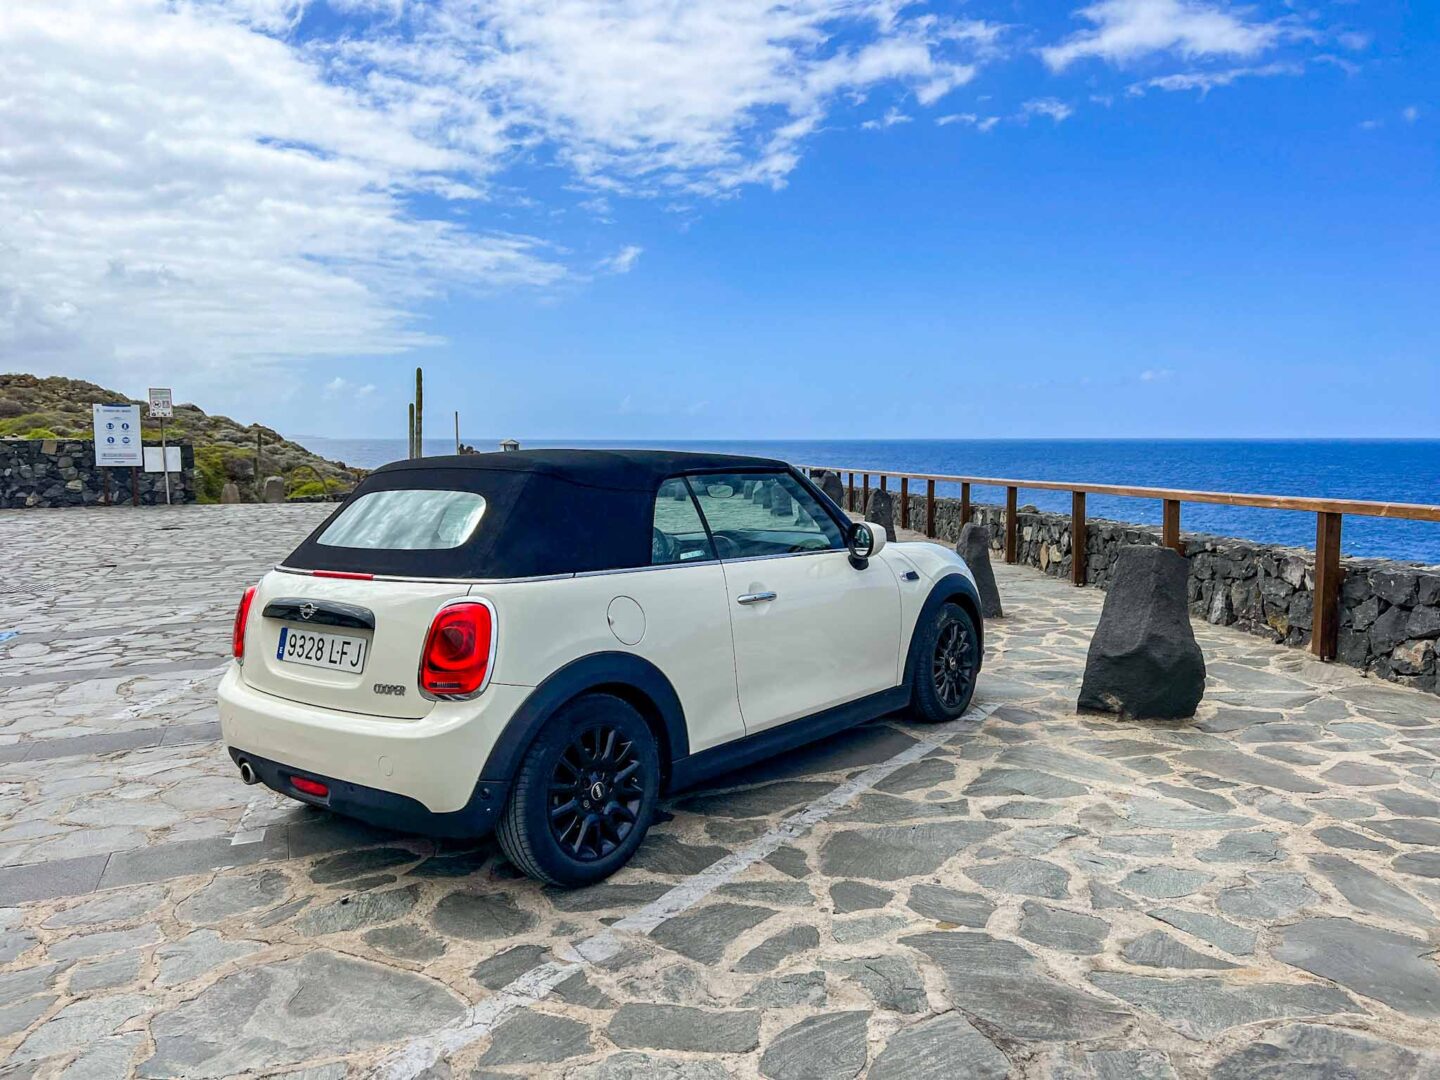 Tenerife road trip, Mini hired car by ocean